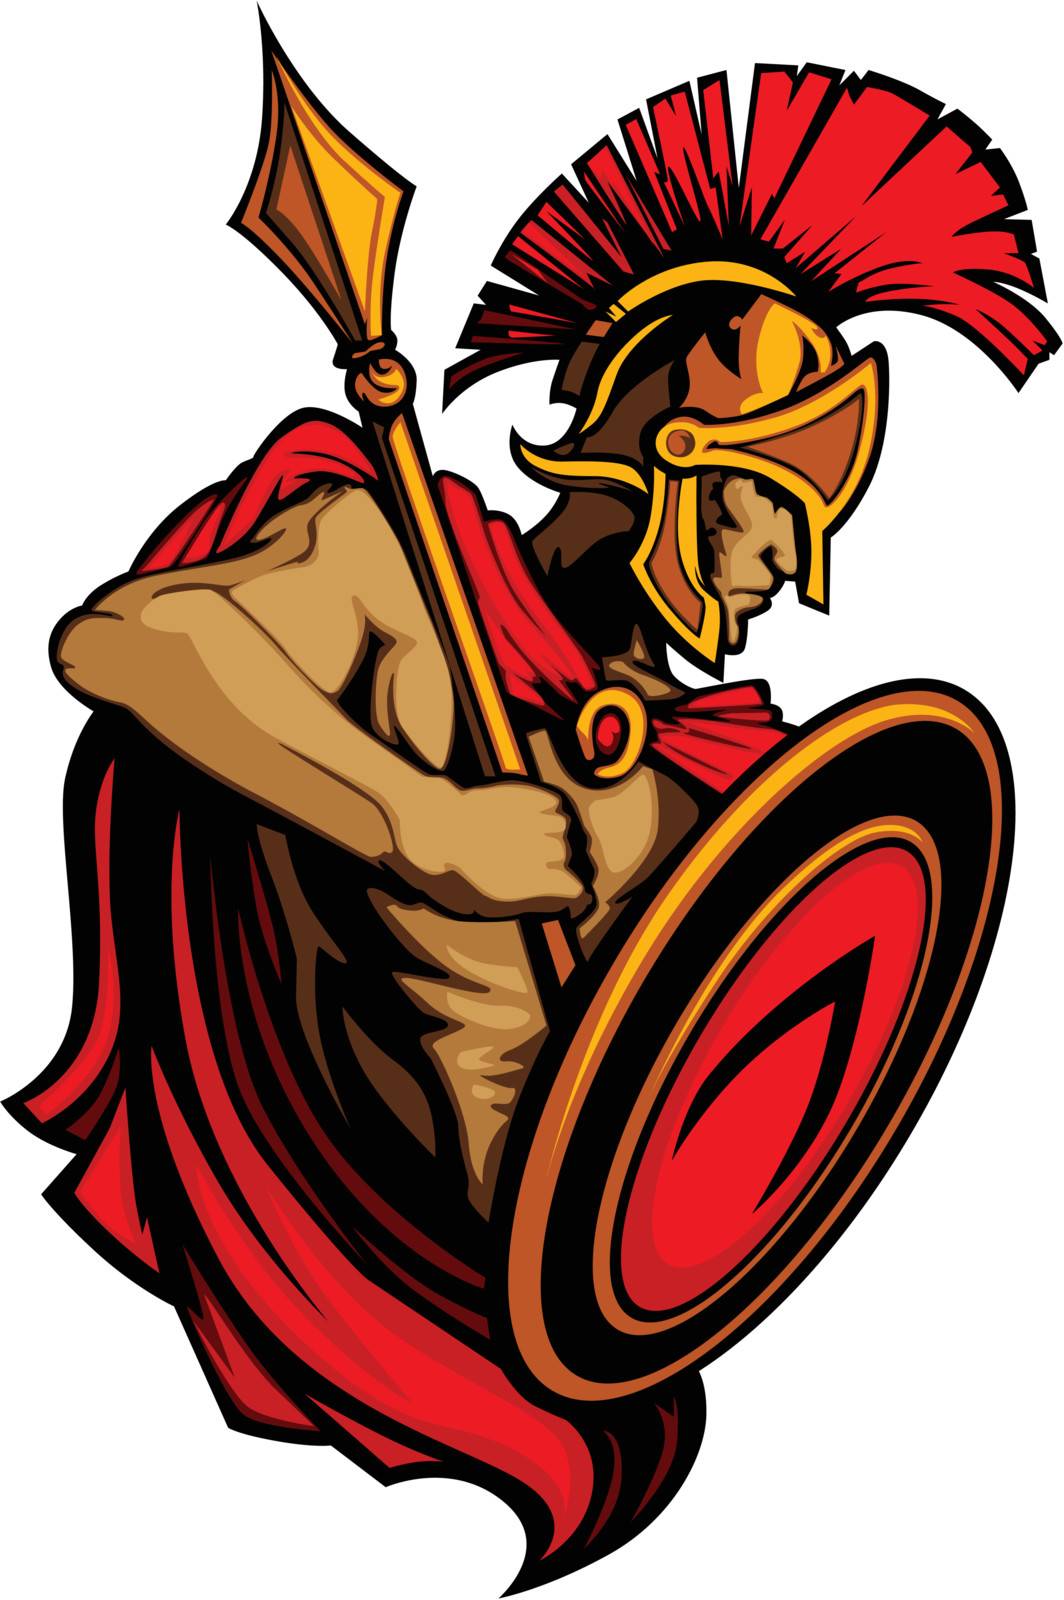 Greek Spartan or Trojan Mascot holding a shield and spear